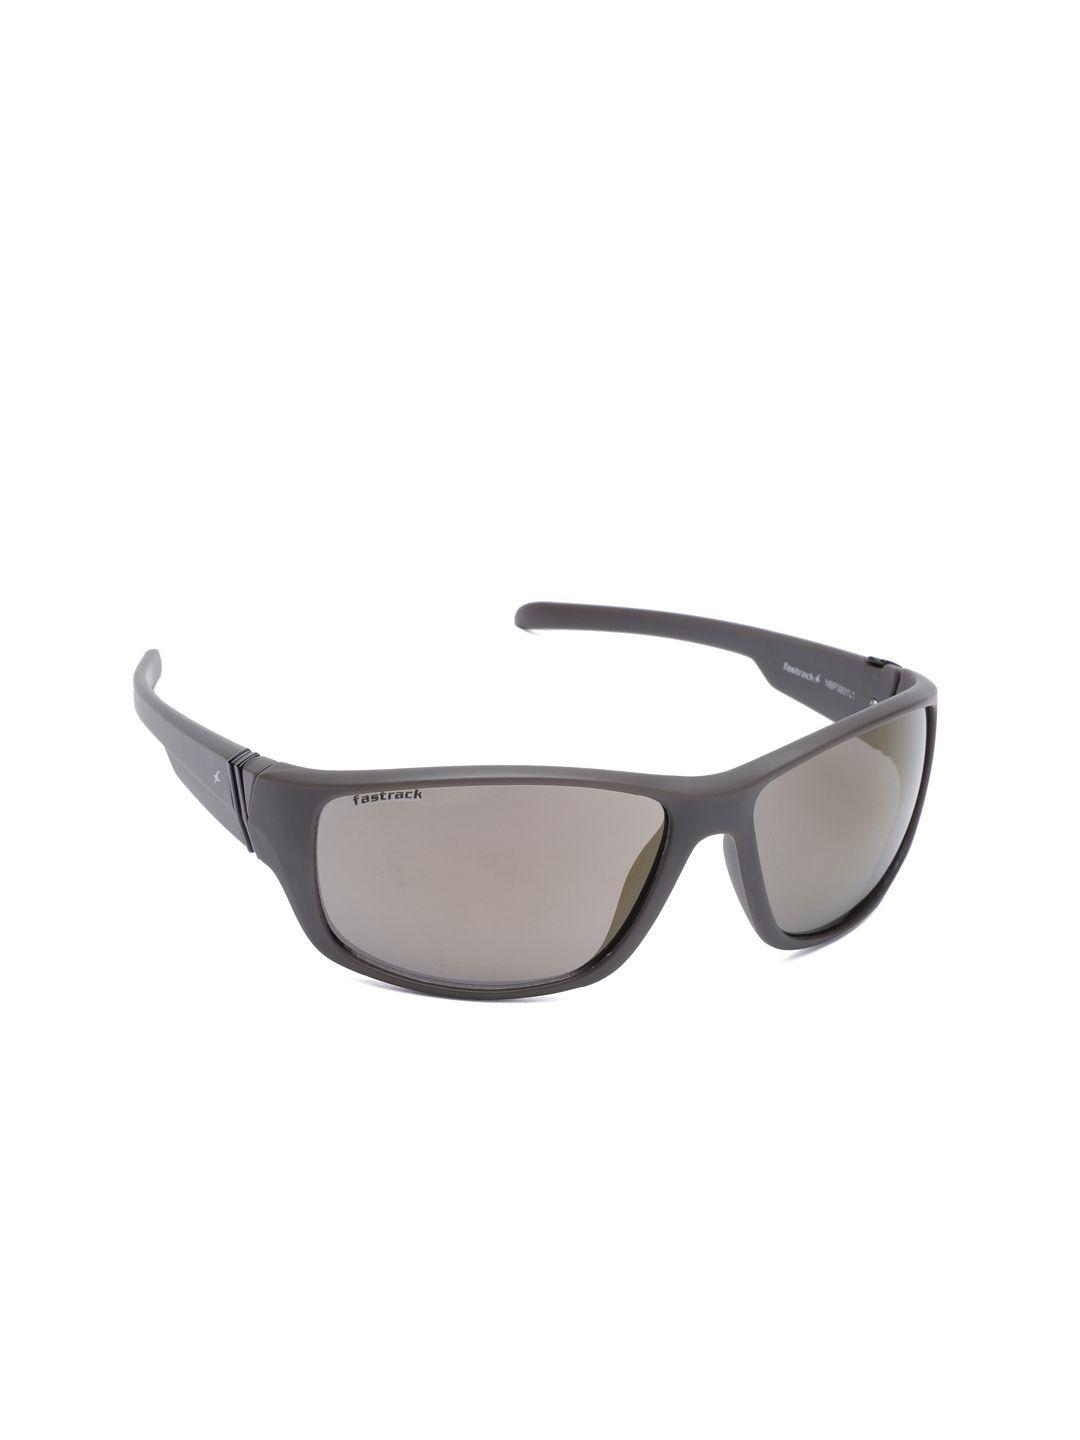 fastrack men mirrored rectangle sunglasses nbp390yl1